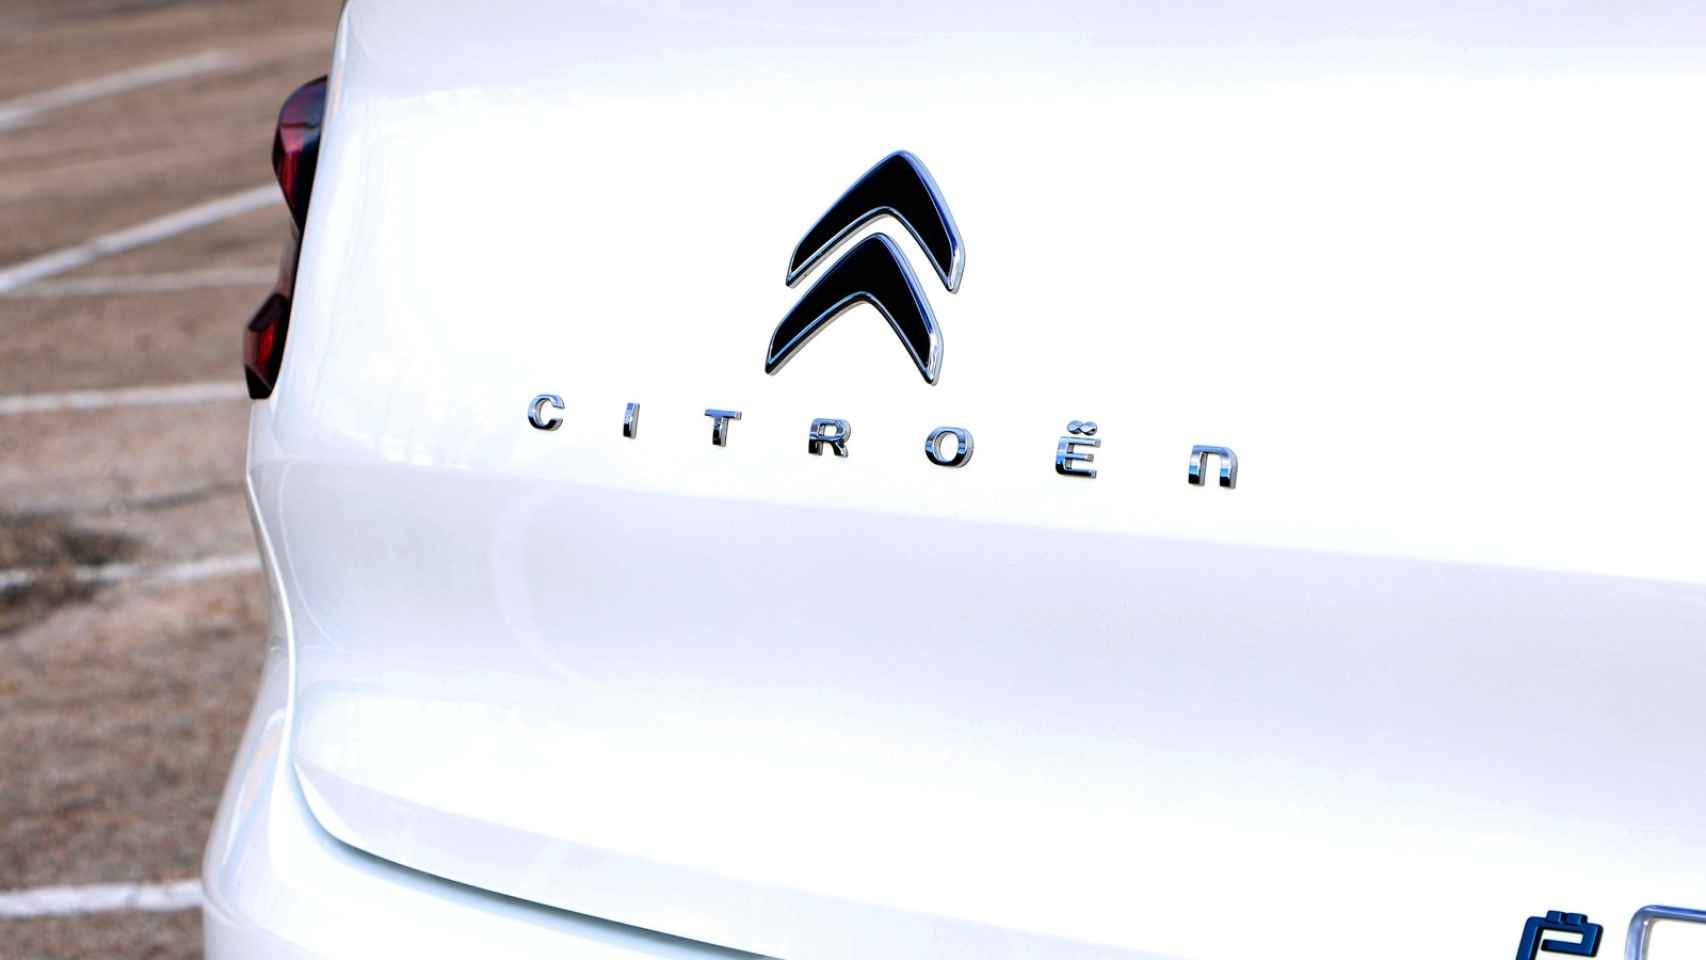 Citroën C4 X